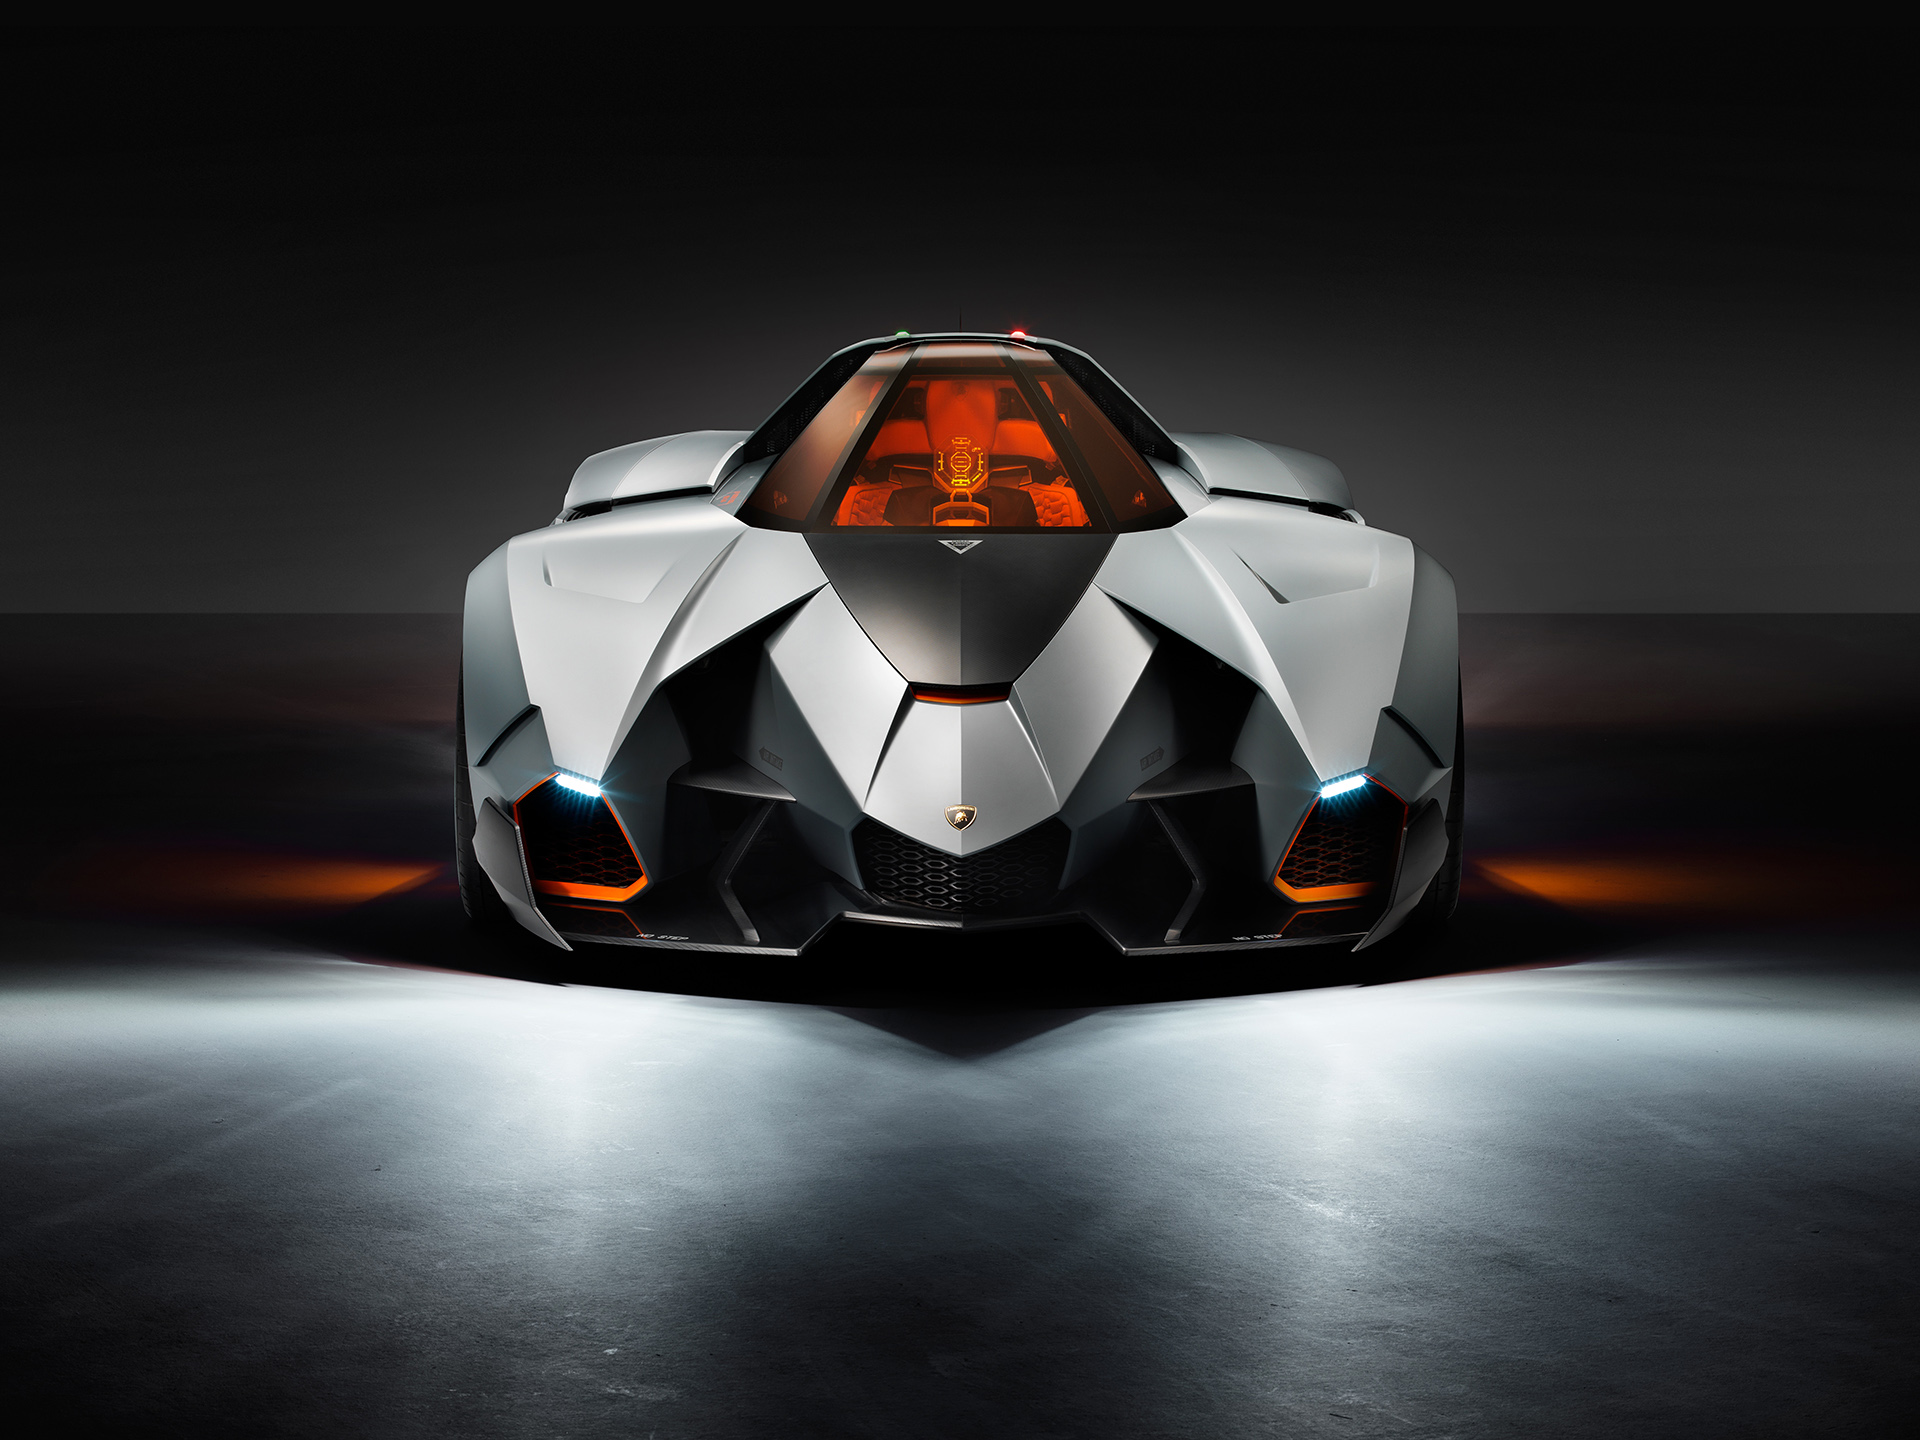  2013 Lamborghini Egoista Concept Wallpaper.